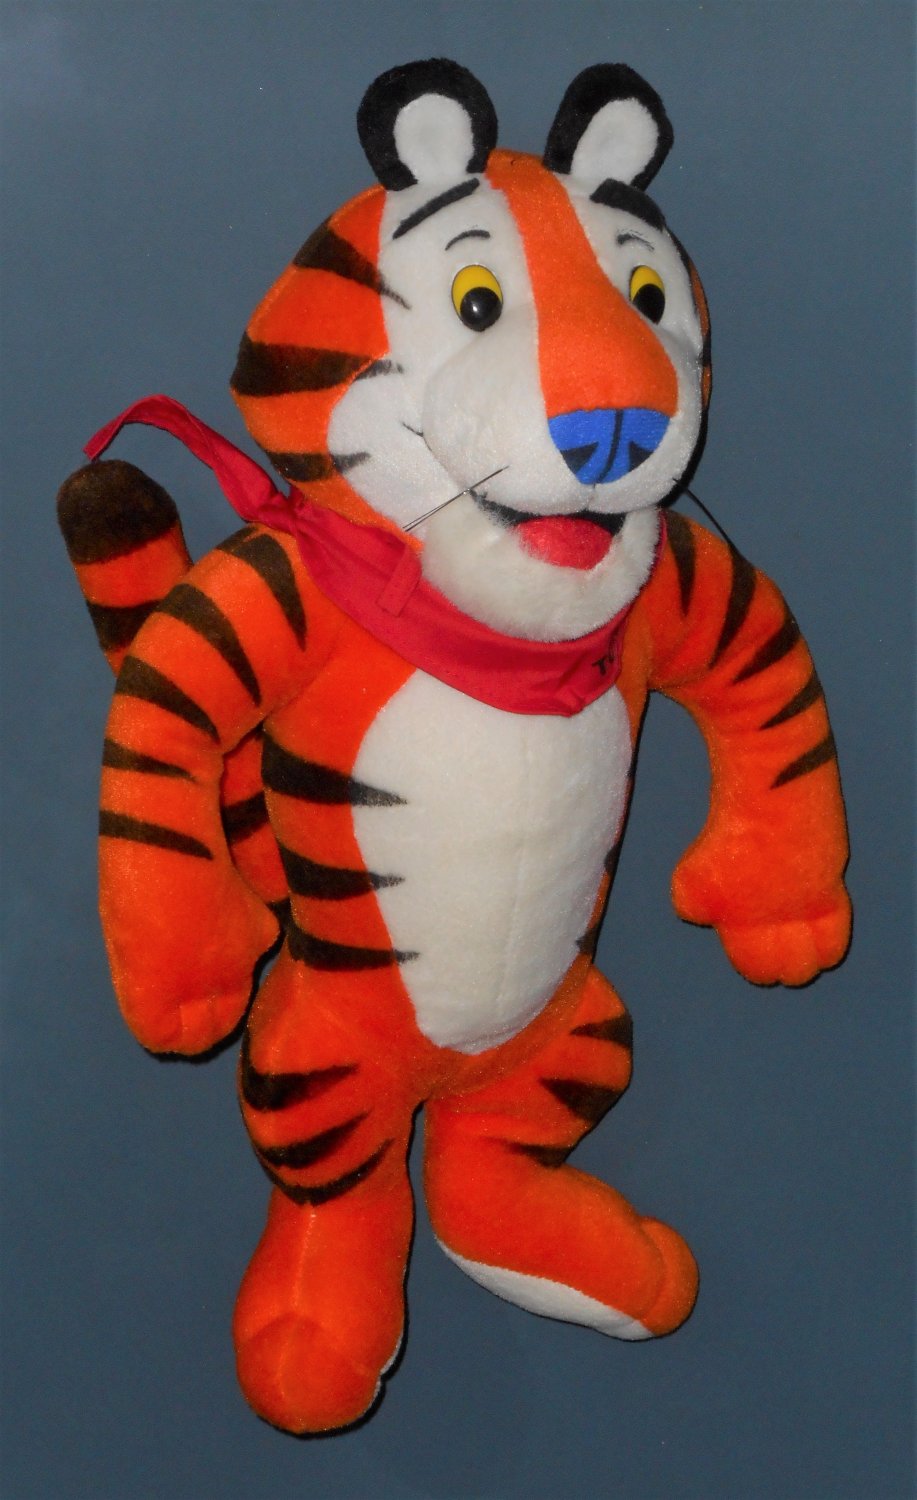 tony the tiger stuffed toy